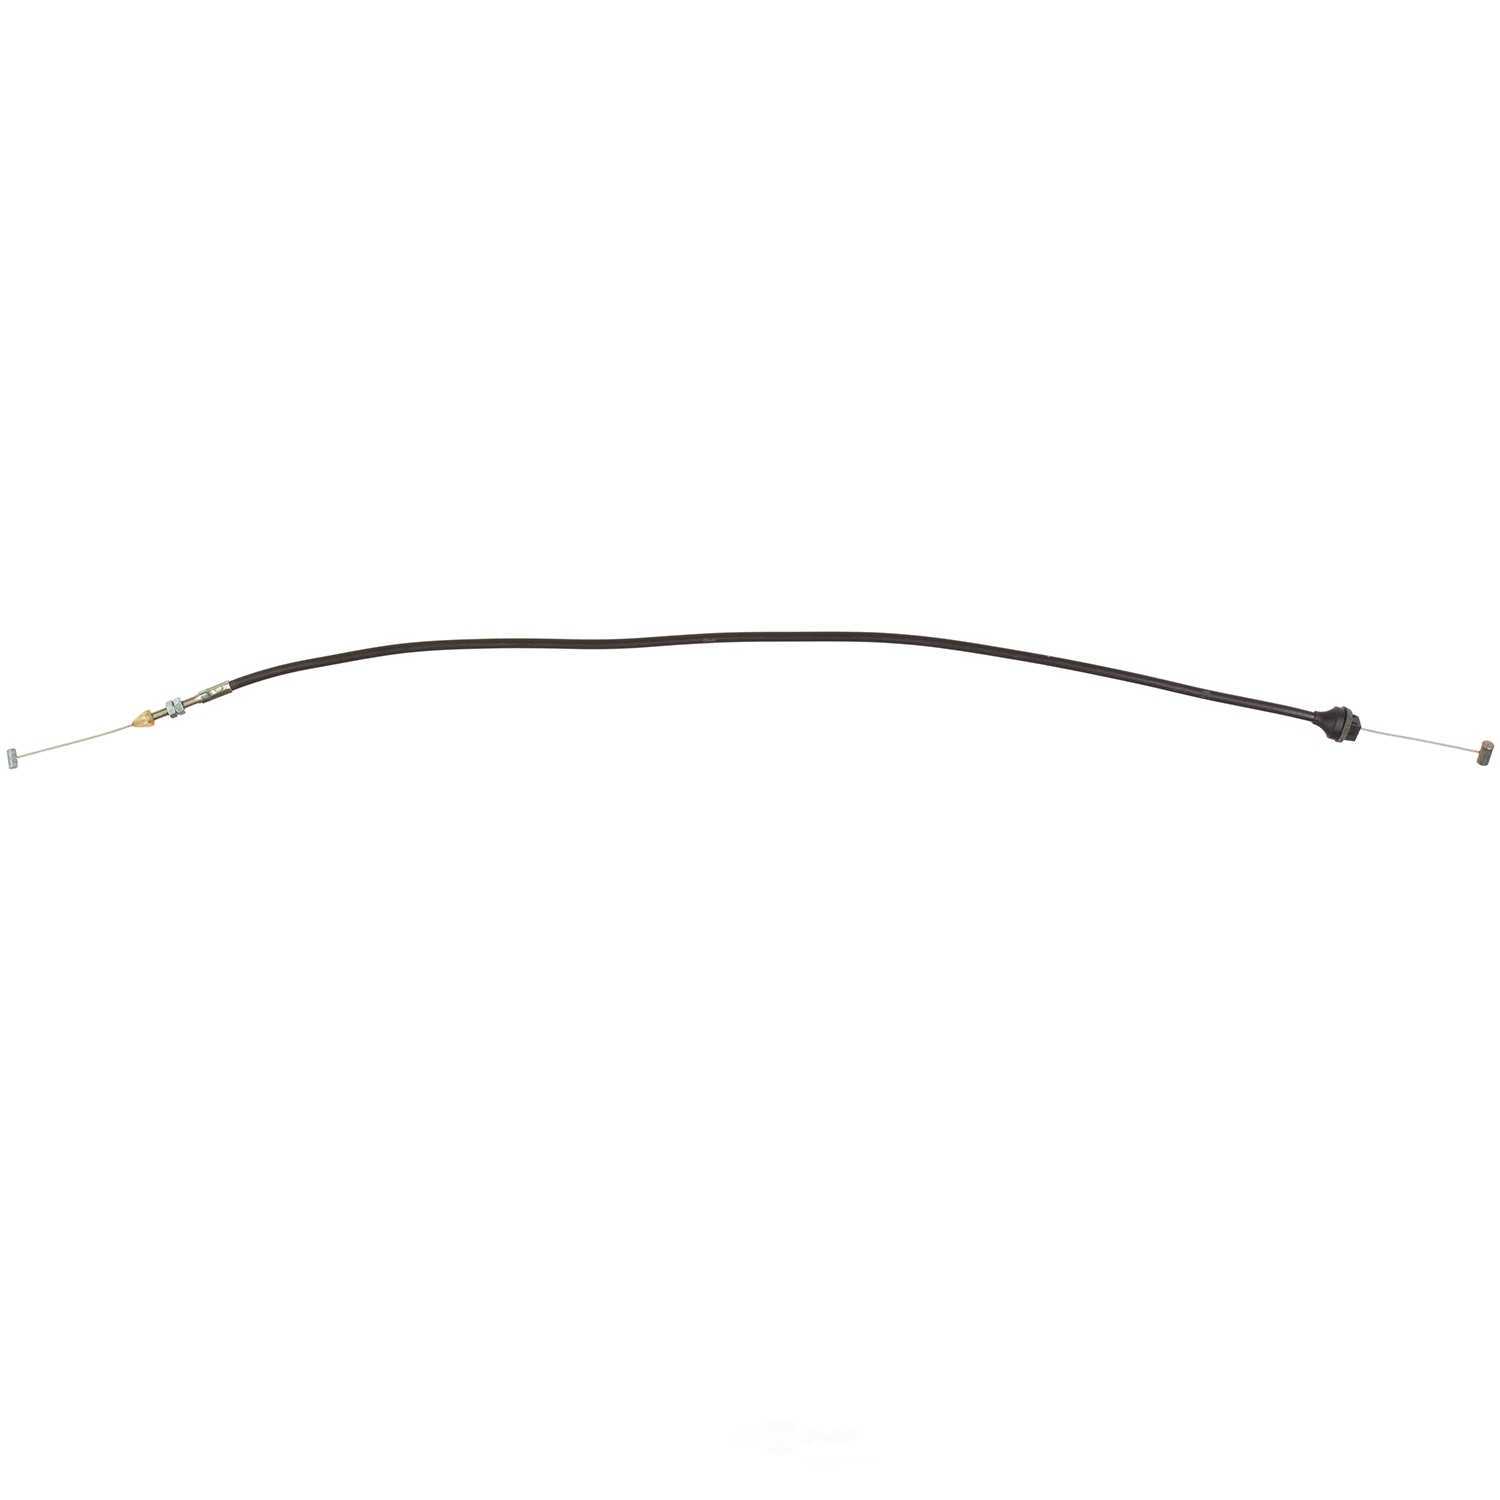 ATP - Accelerator Cable - ATP Y-639